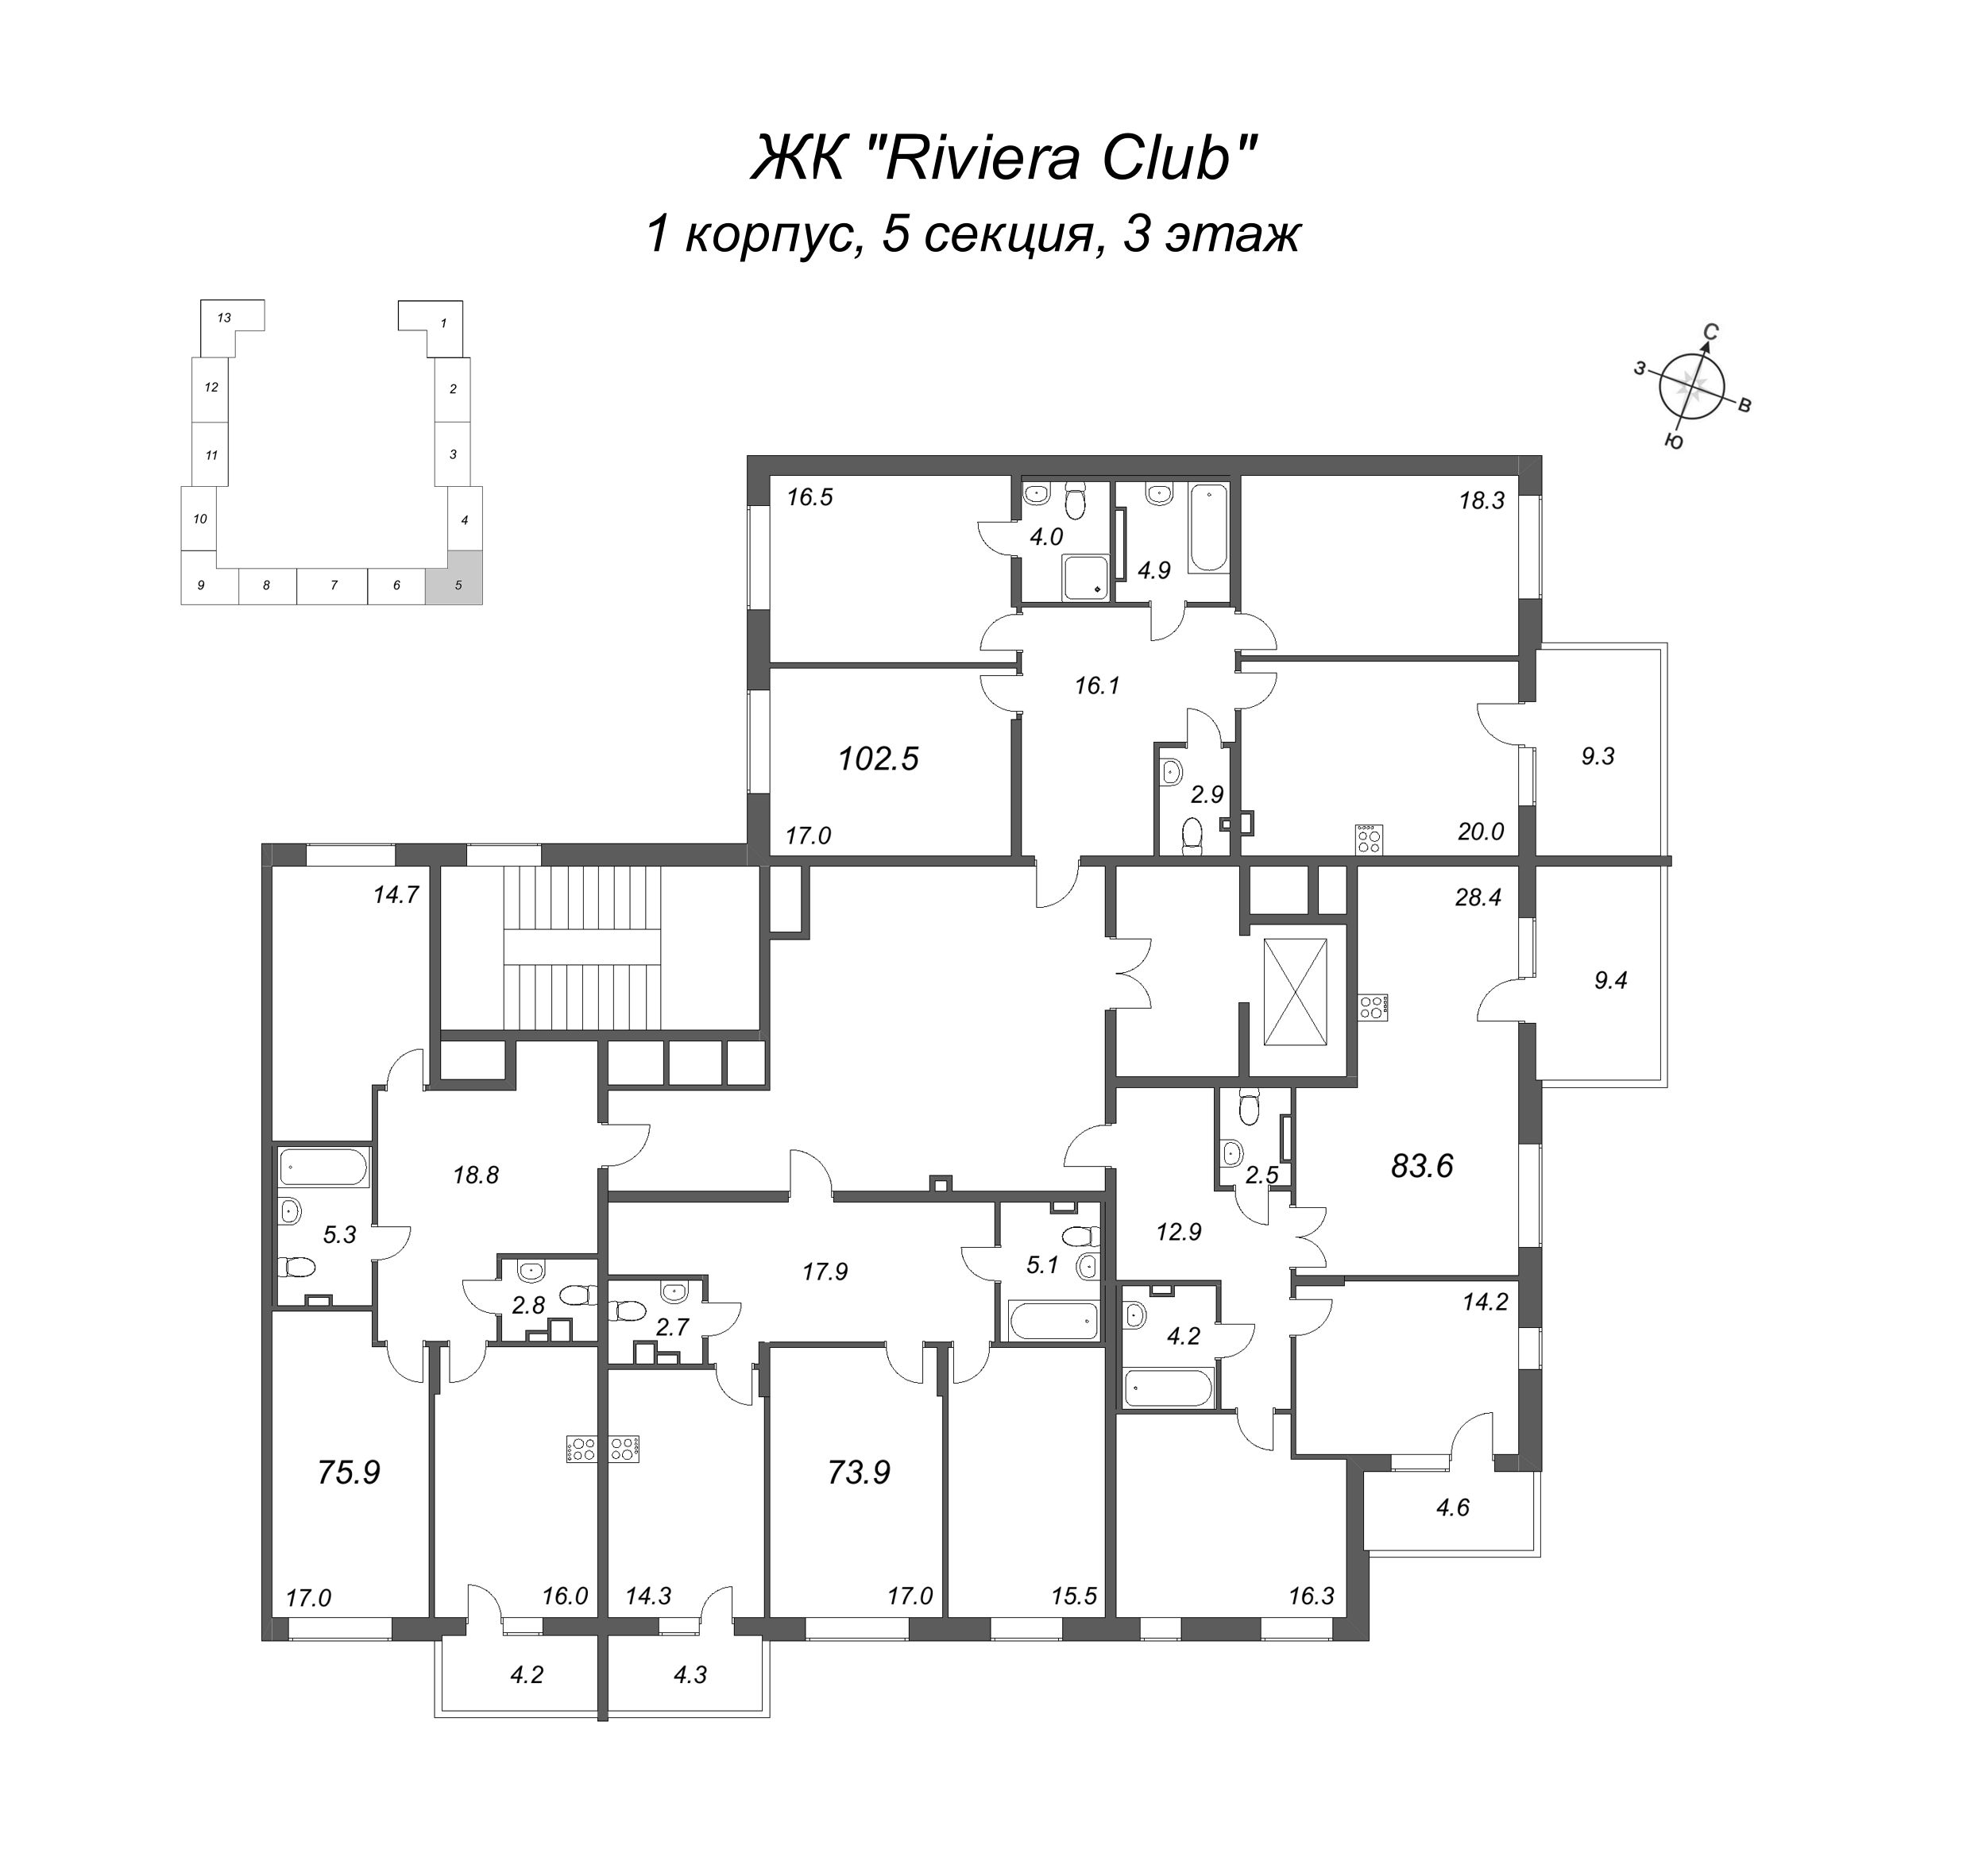 3-комнатная (Евро) квартира, 75.9 м² в ЖК "Riviera Club" - планировка этажа